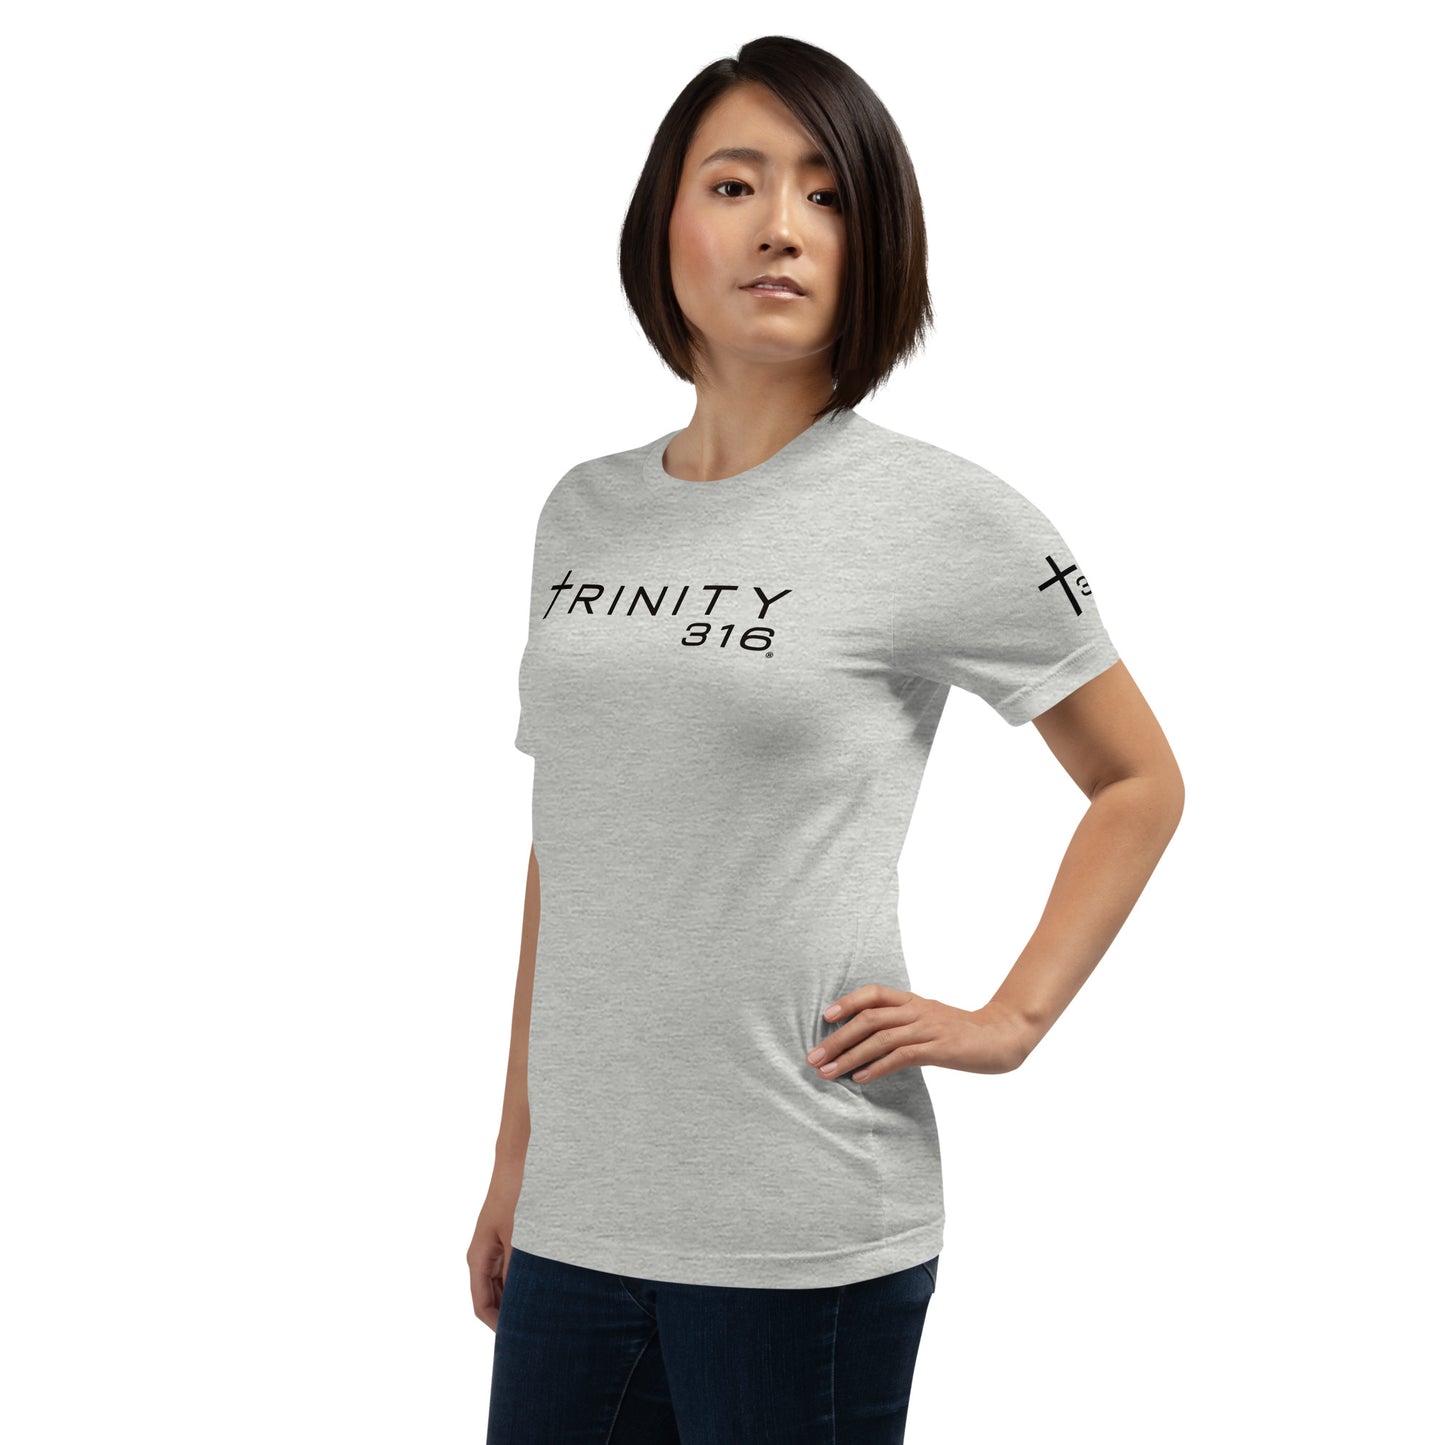 Trinity 316 T-Shirt - Grey Heather